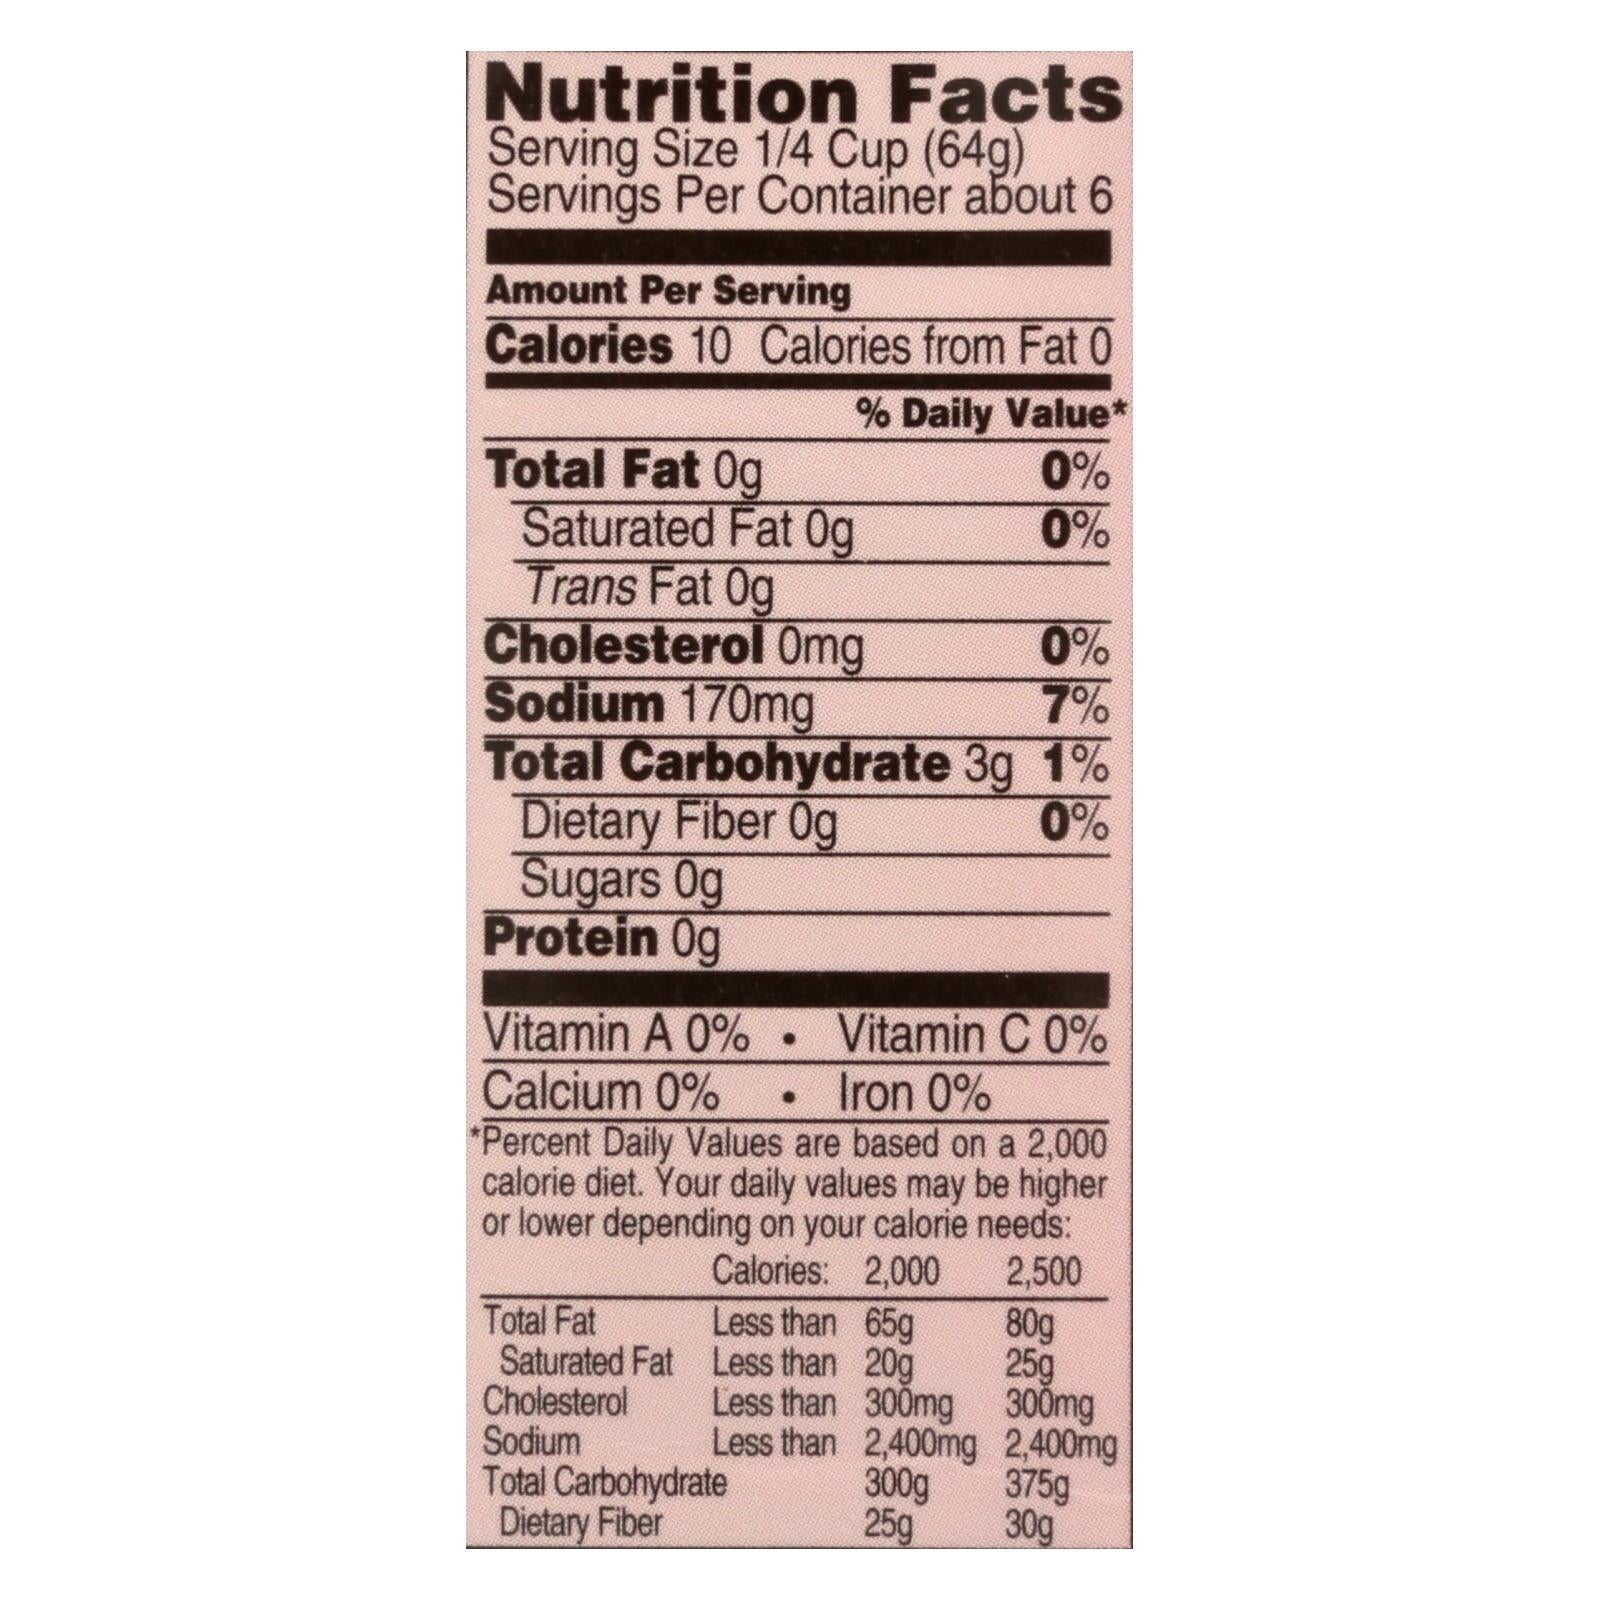 Imagine Foods Gravy - Organic - Vegetable Wild Mushroom - Case Of 12 - 13.5 Fl Oz